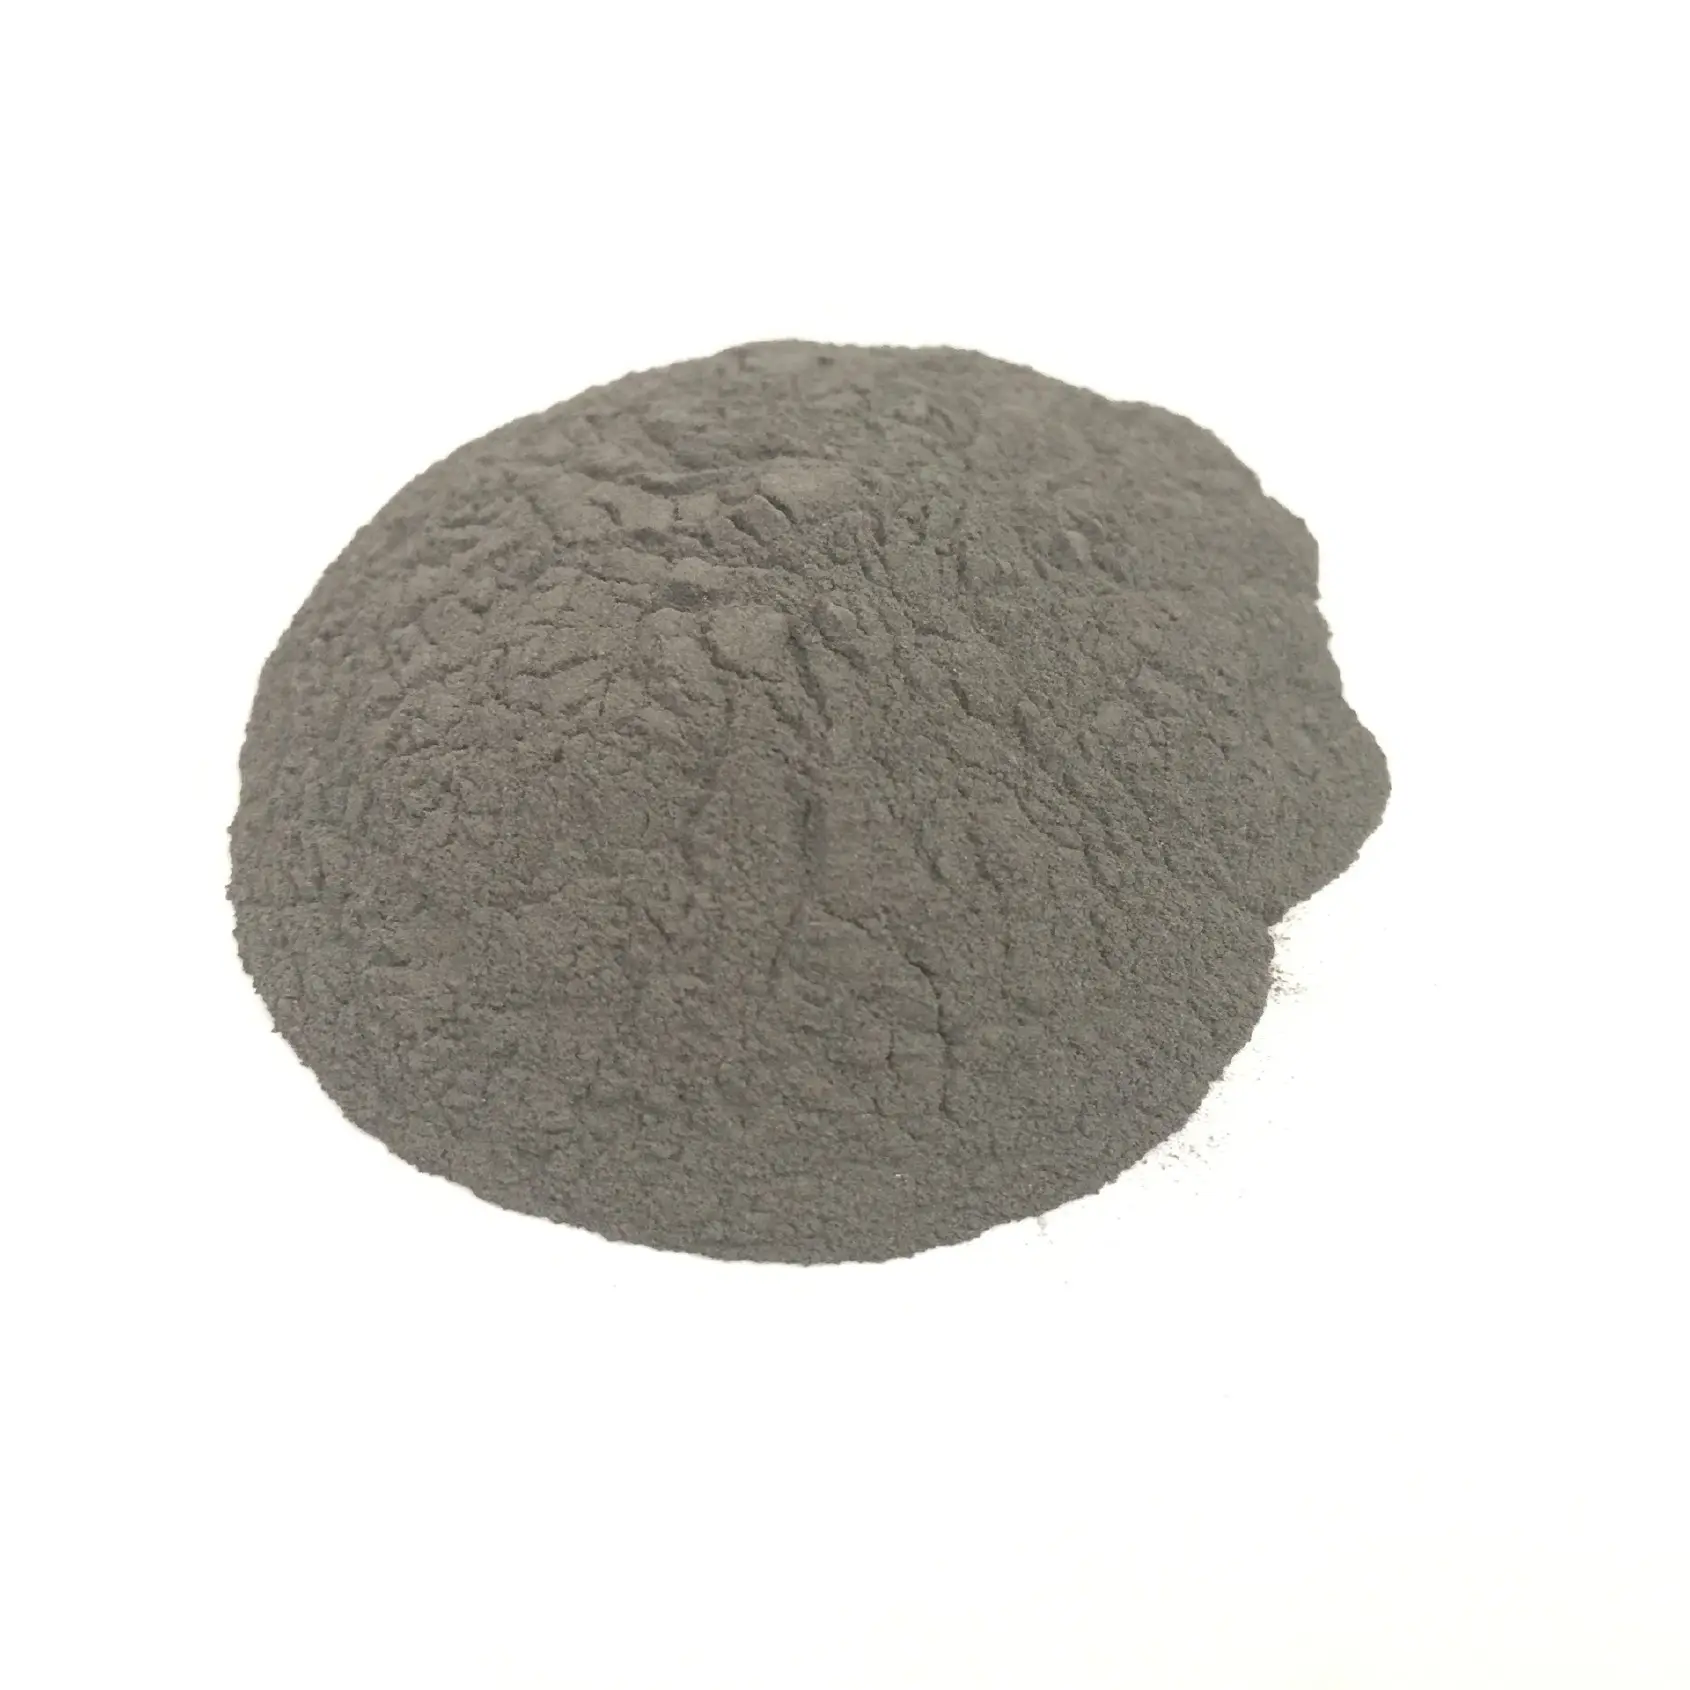 Chromium carbide powder Cr3C2 metal ceramic powder wear resistance anti corrosion